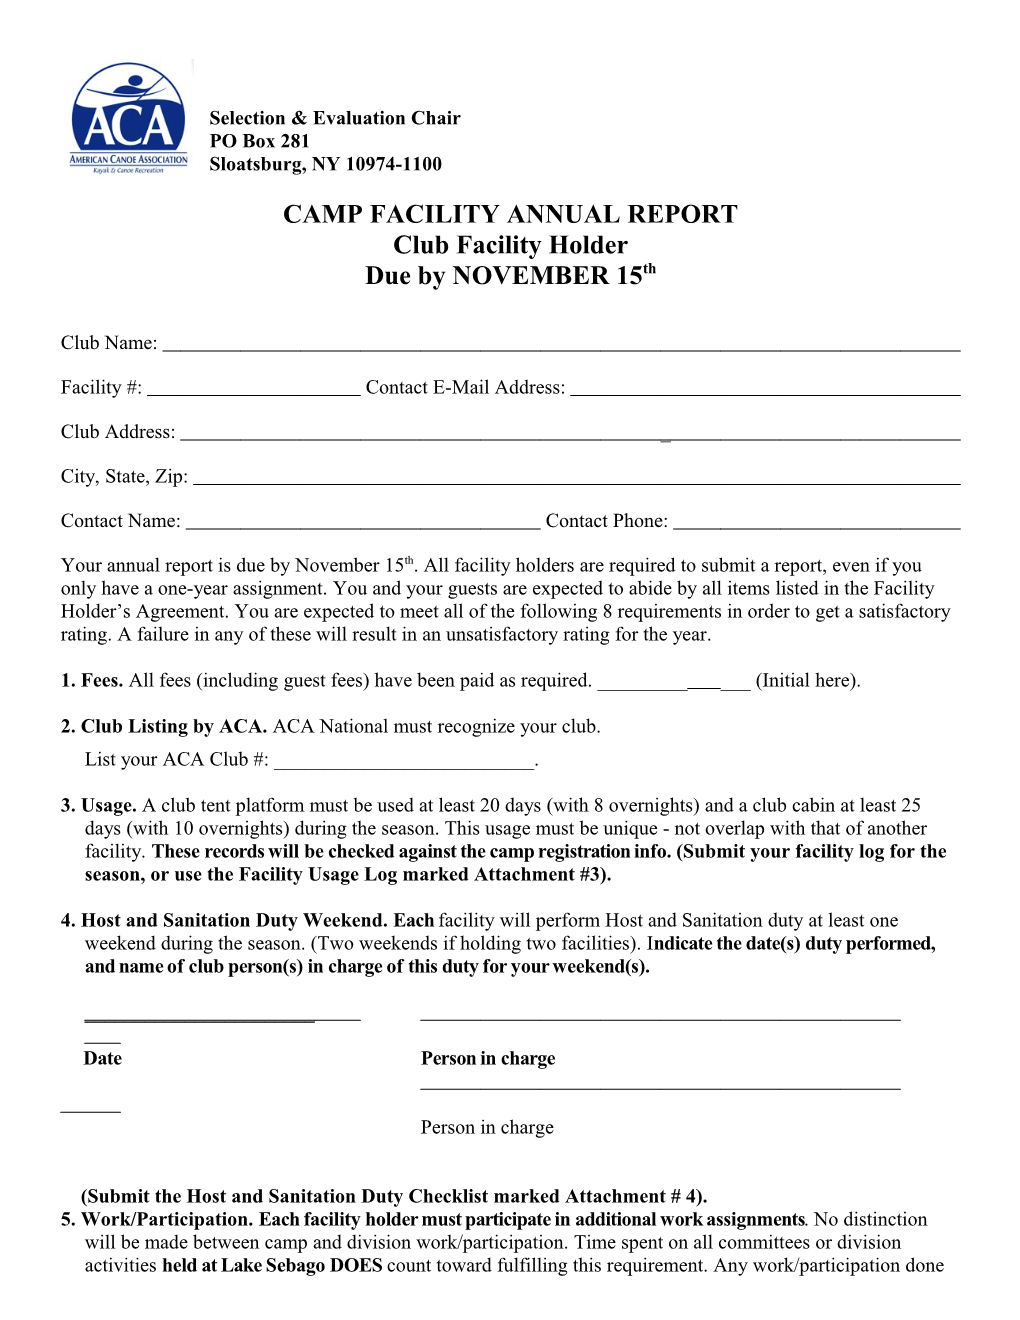 Camp Facility Annual Report